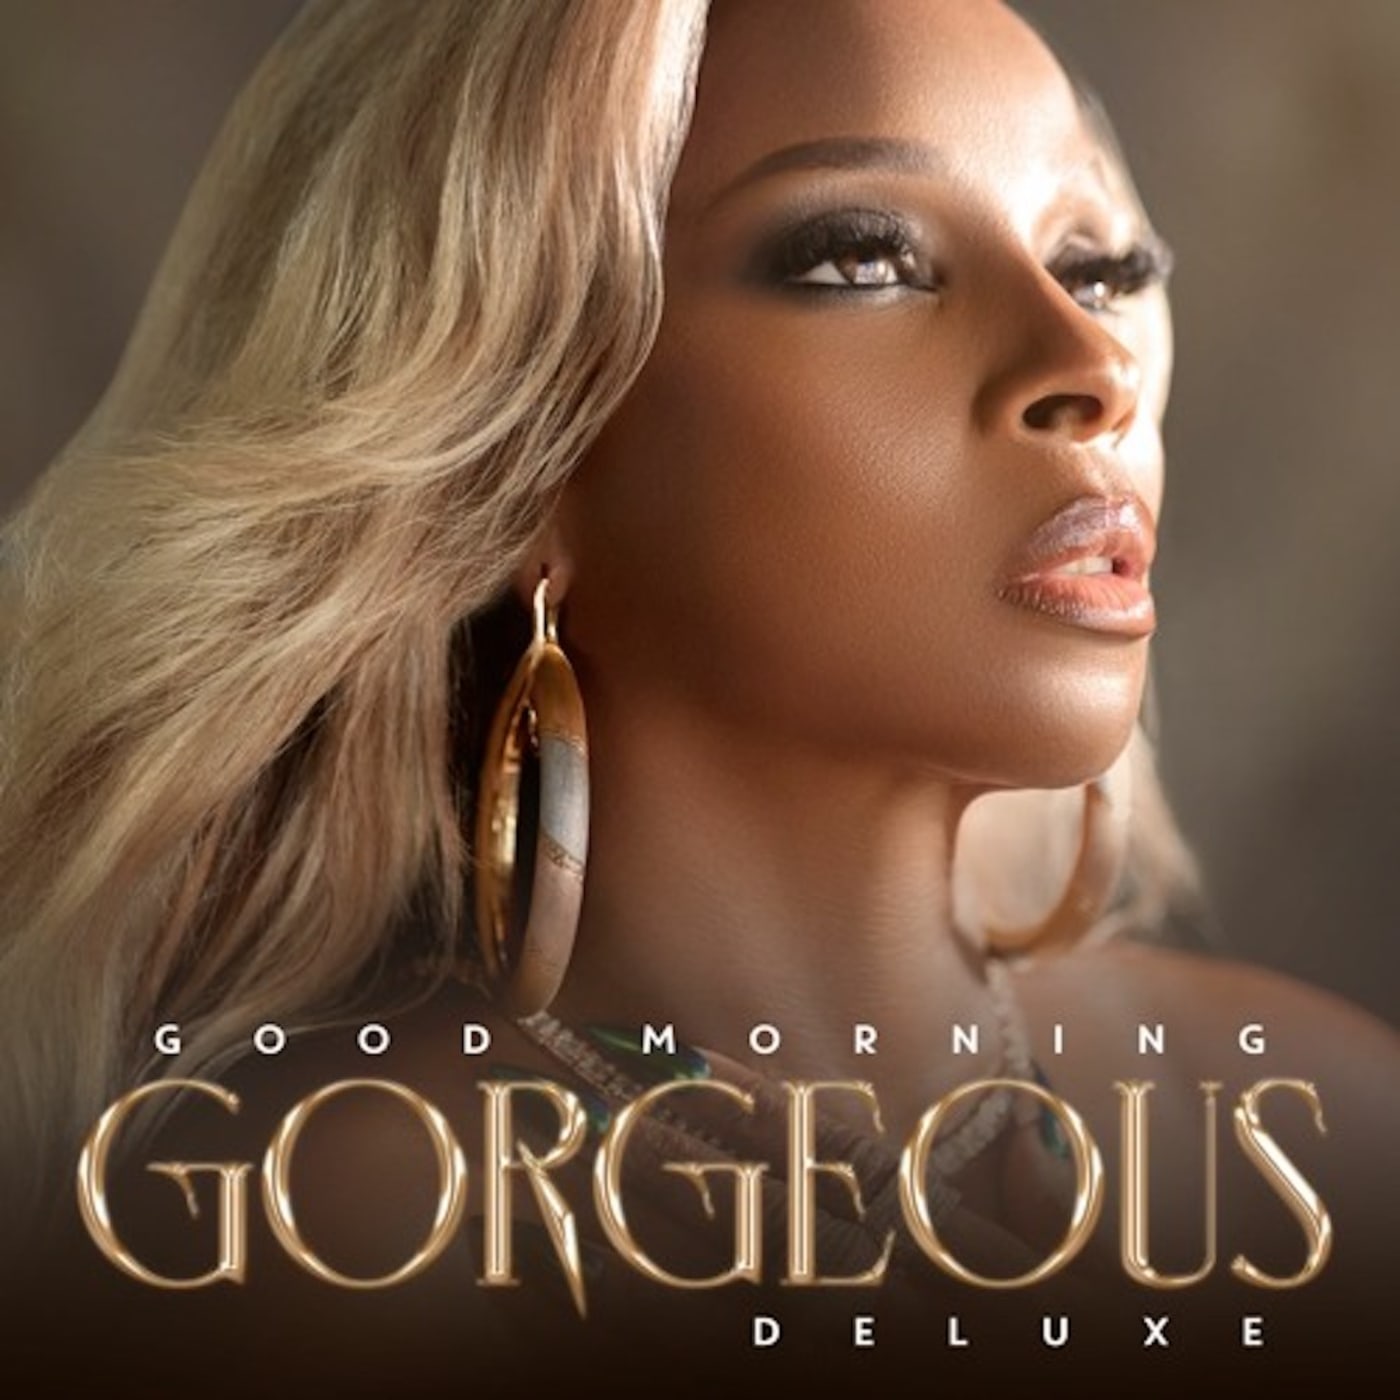 Mary J Blige cover for deluxe album Good Morning Gorgeous